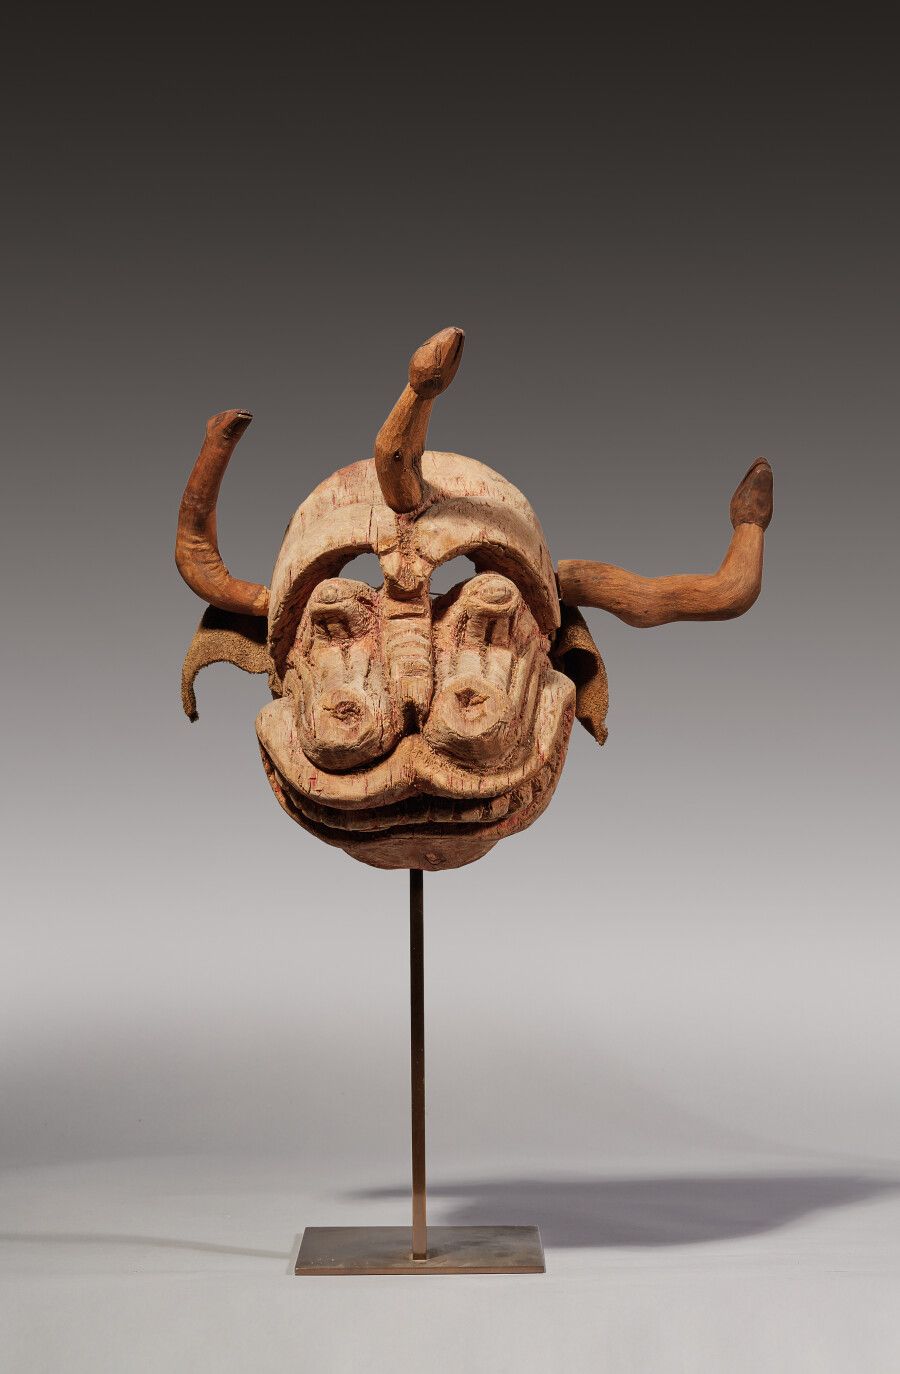 Null 怪异的面具，附有皮革耳朵。一条蛇从额头出来了

带有使用痕迹的木材

中美洲民间艺术

高度高度：28厘米



专家：Stéphane Mangin